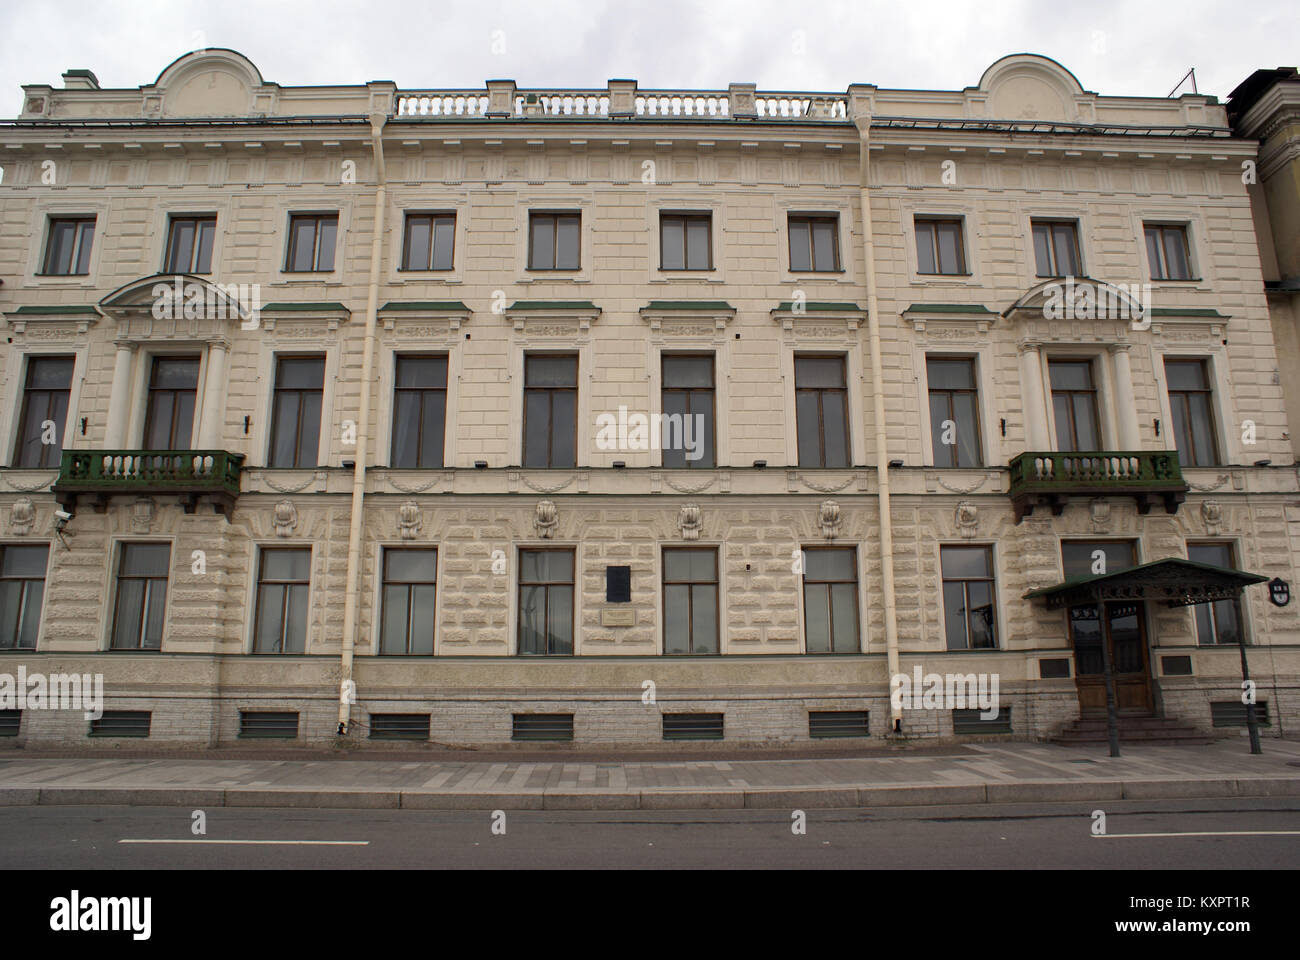 Facade with green balconies in St-Petersburg, Russia Stock Photo